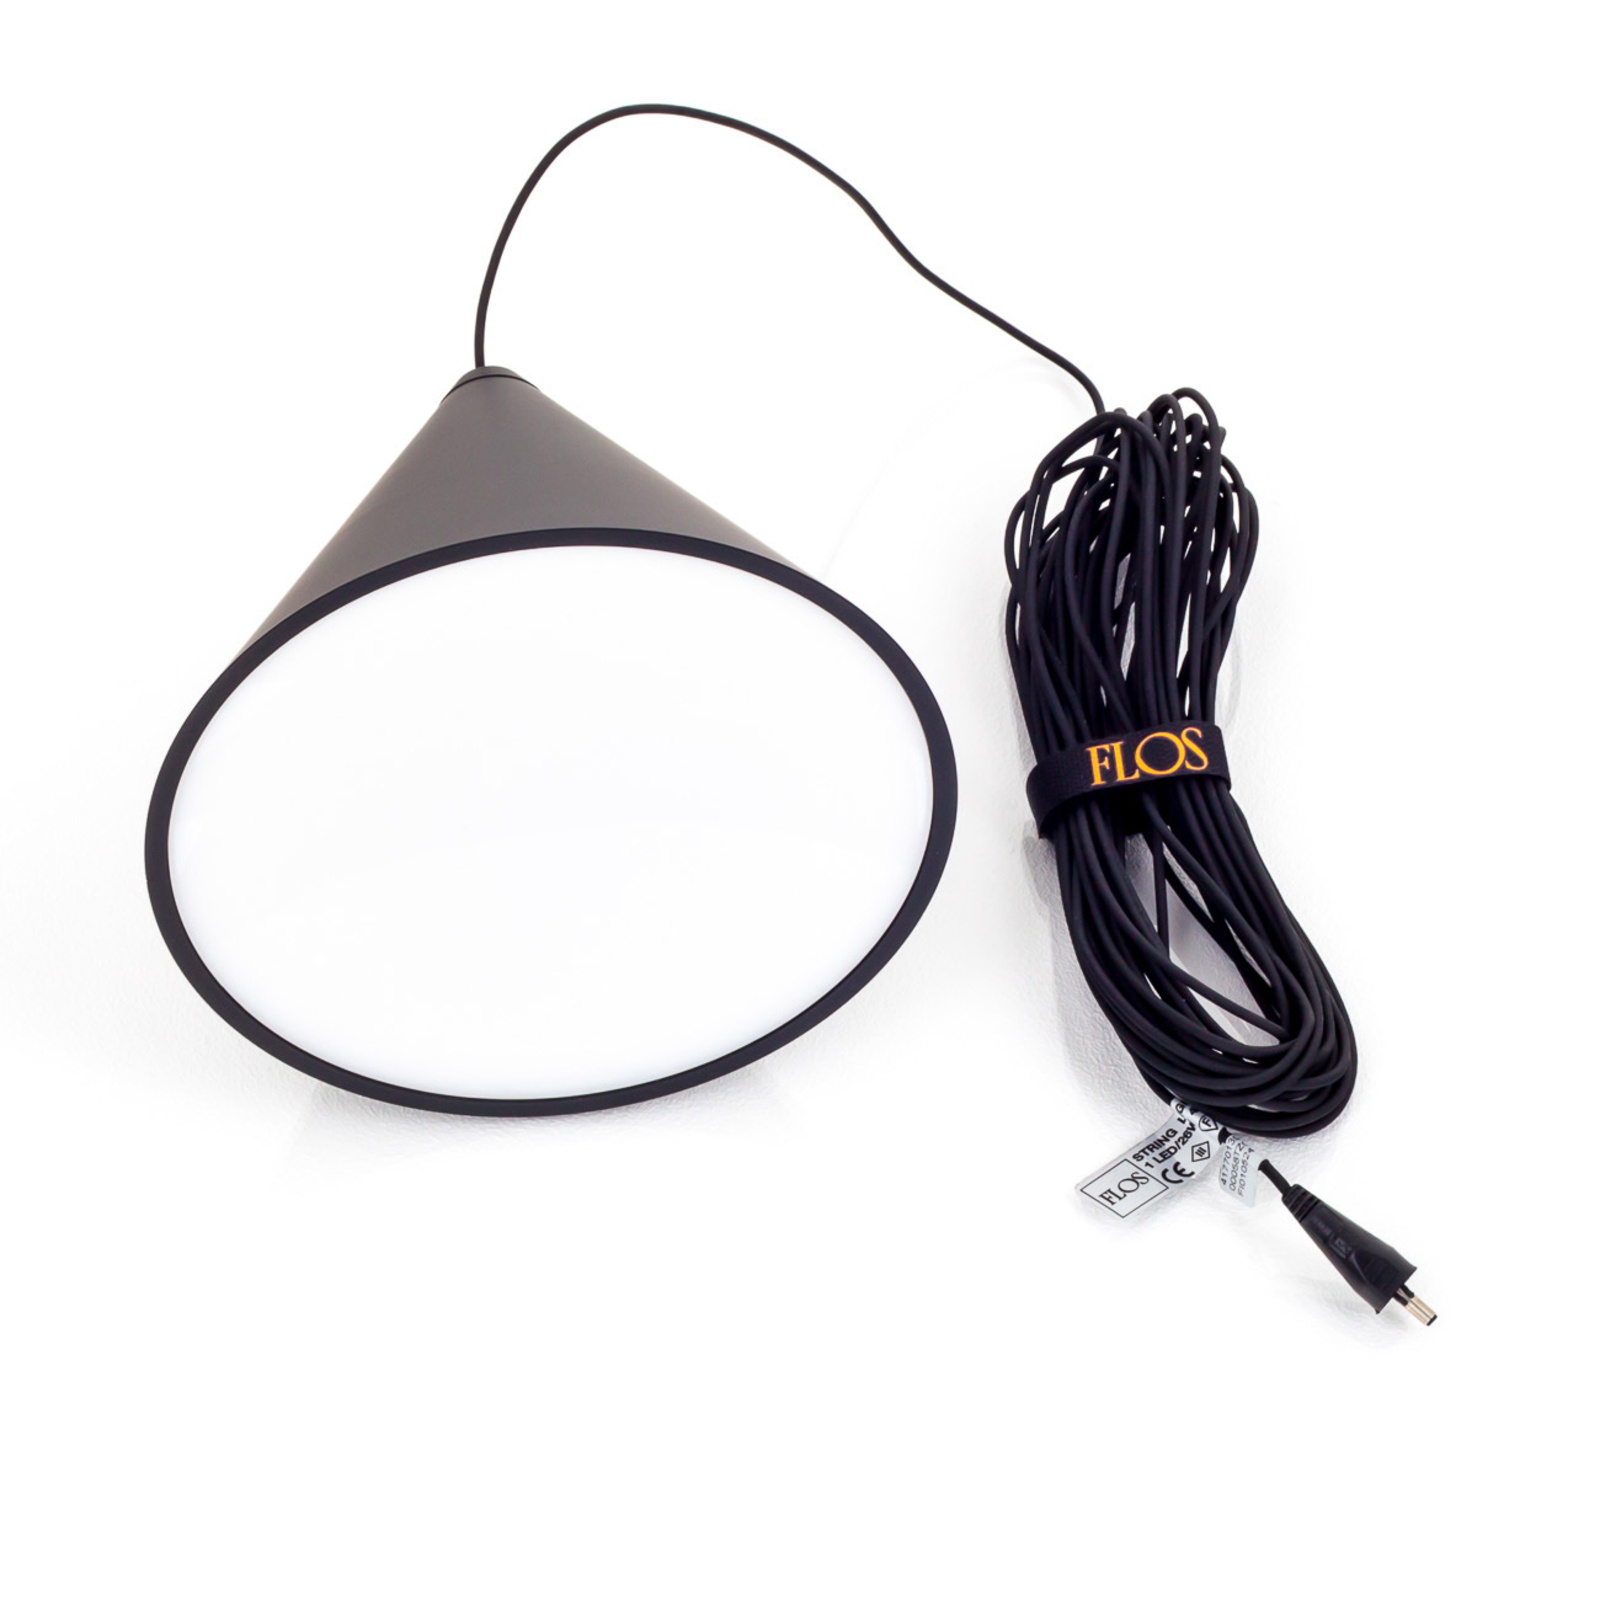 FLOS snoer Light hanglamp, 12m kabel, kegel